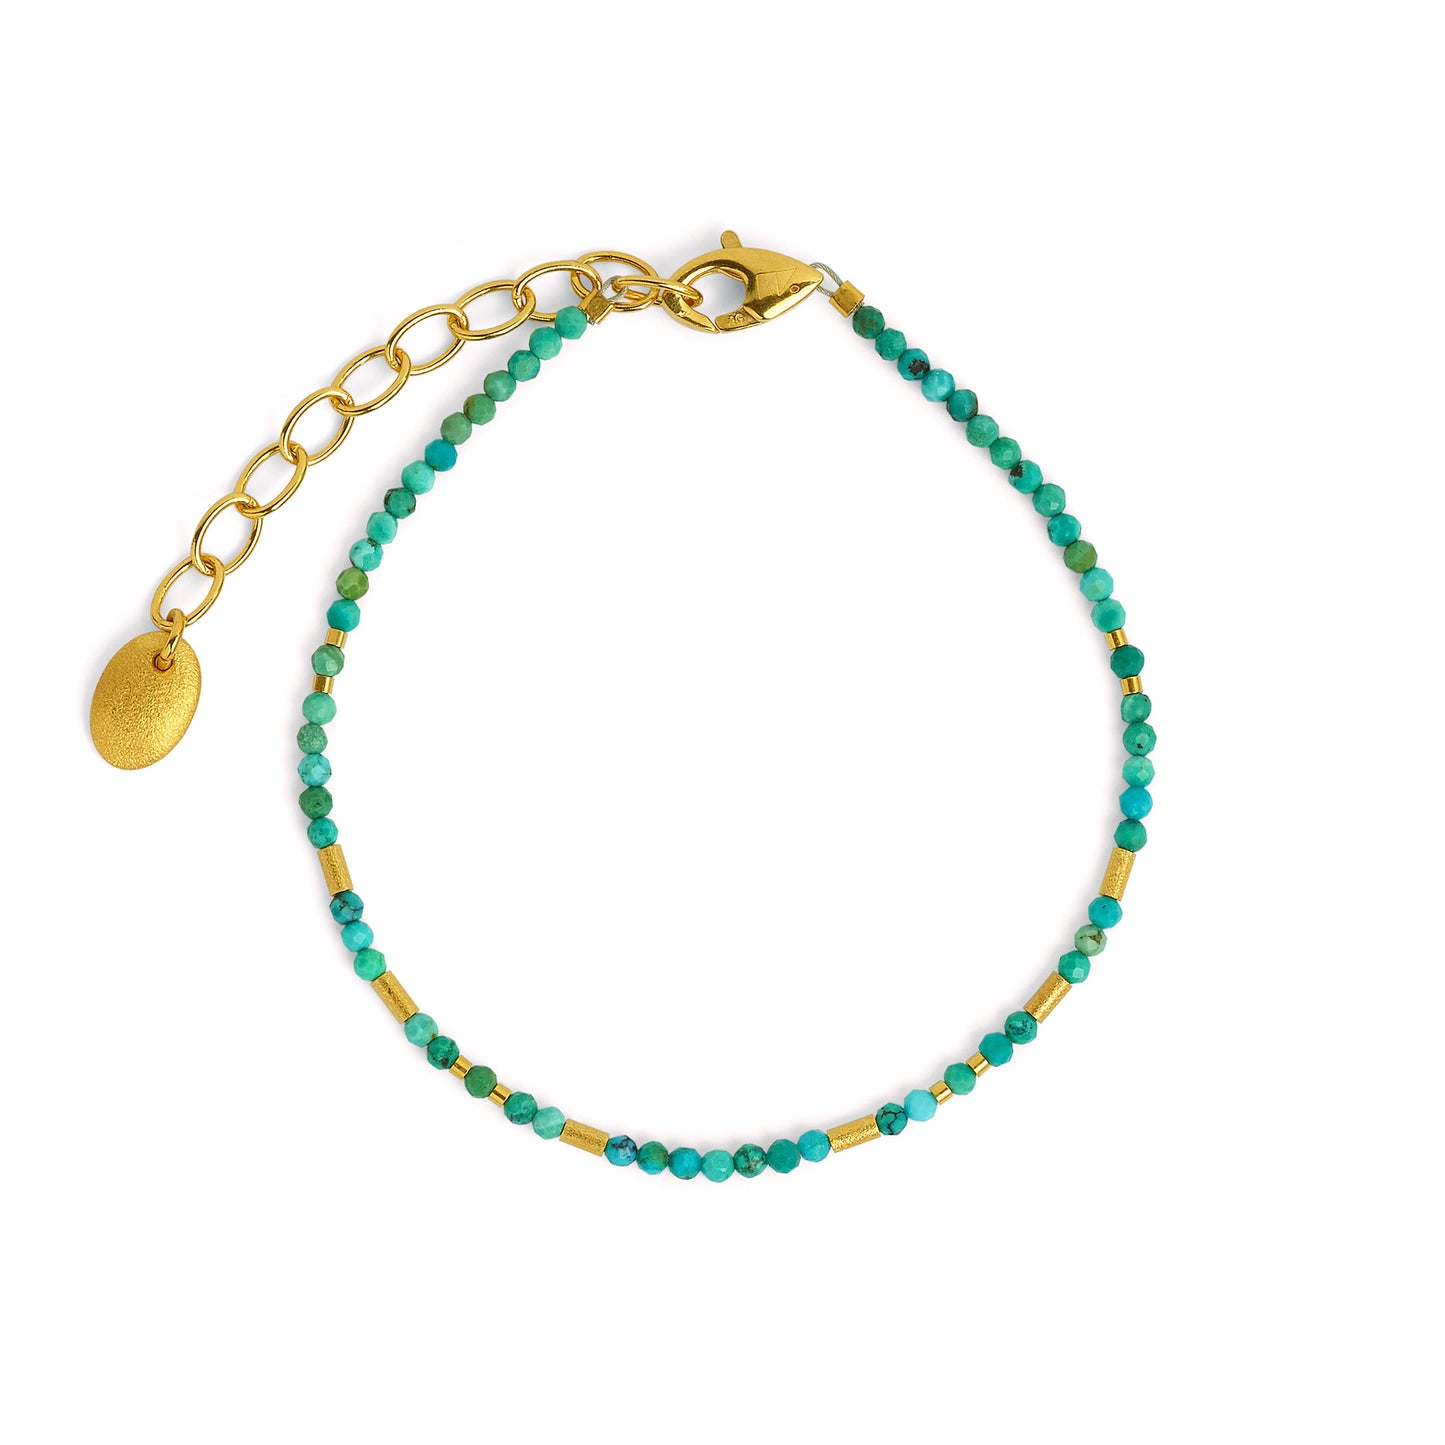 Bernd Wolf Collection "Tabaci" Turquoise Bracelet